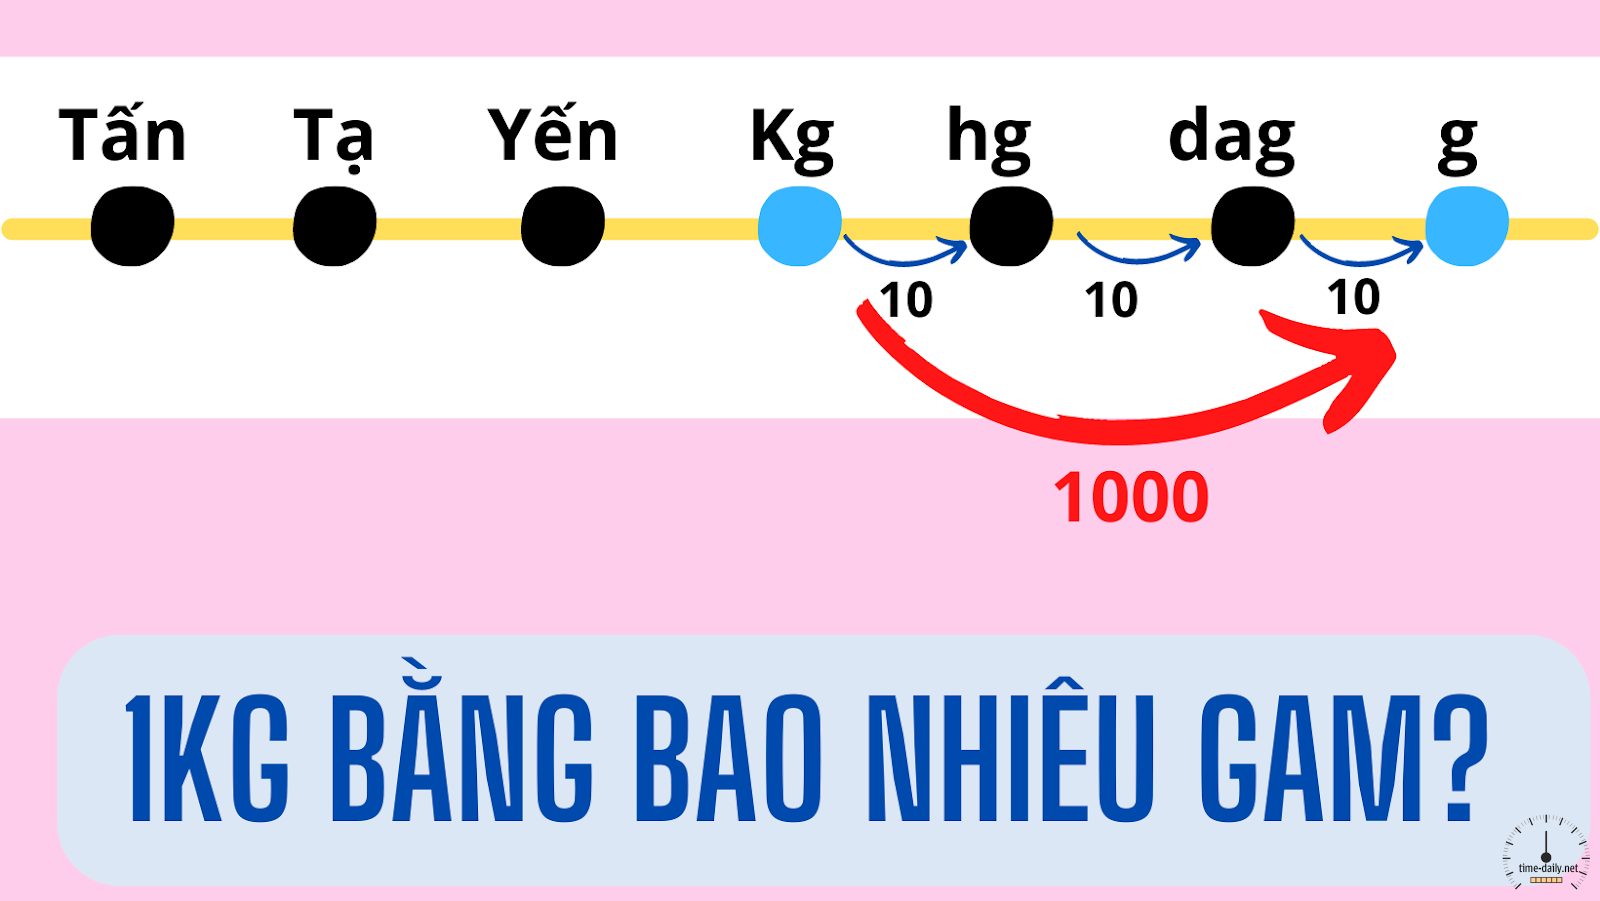 1kg-bang-bao-nhieu-gam-3